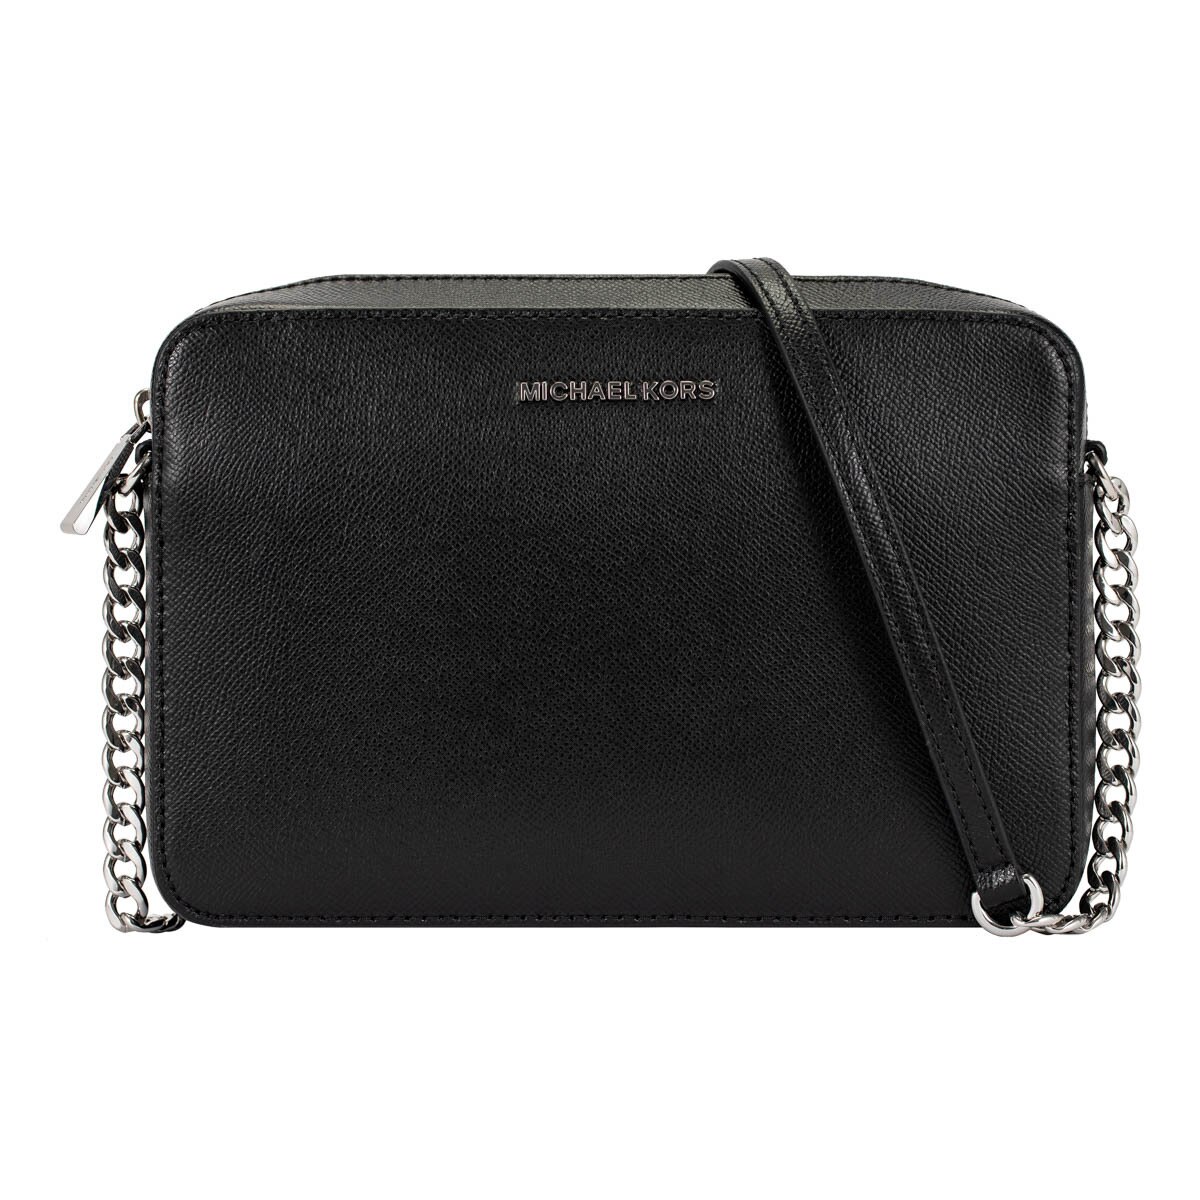 Michael Kors Handbags Costco | semashow.com